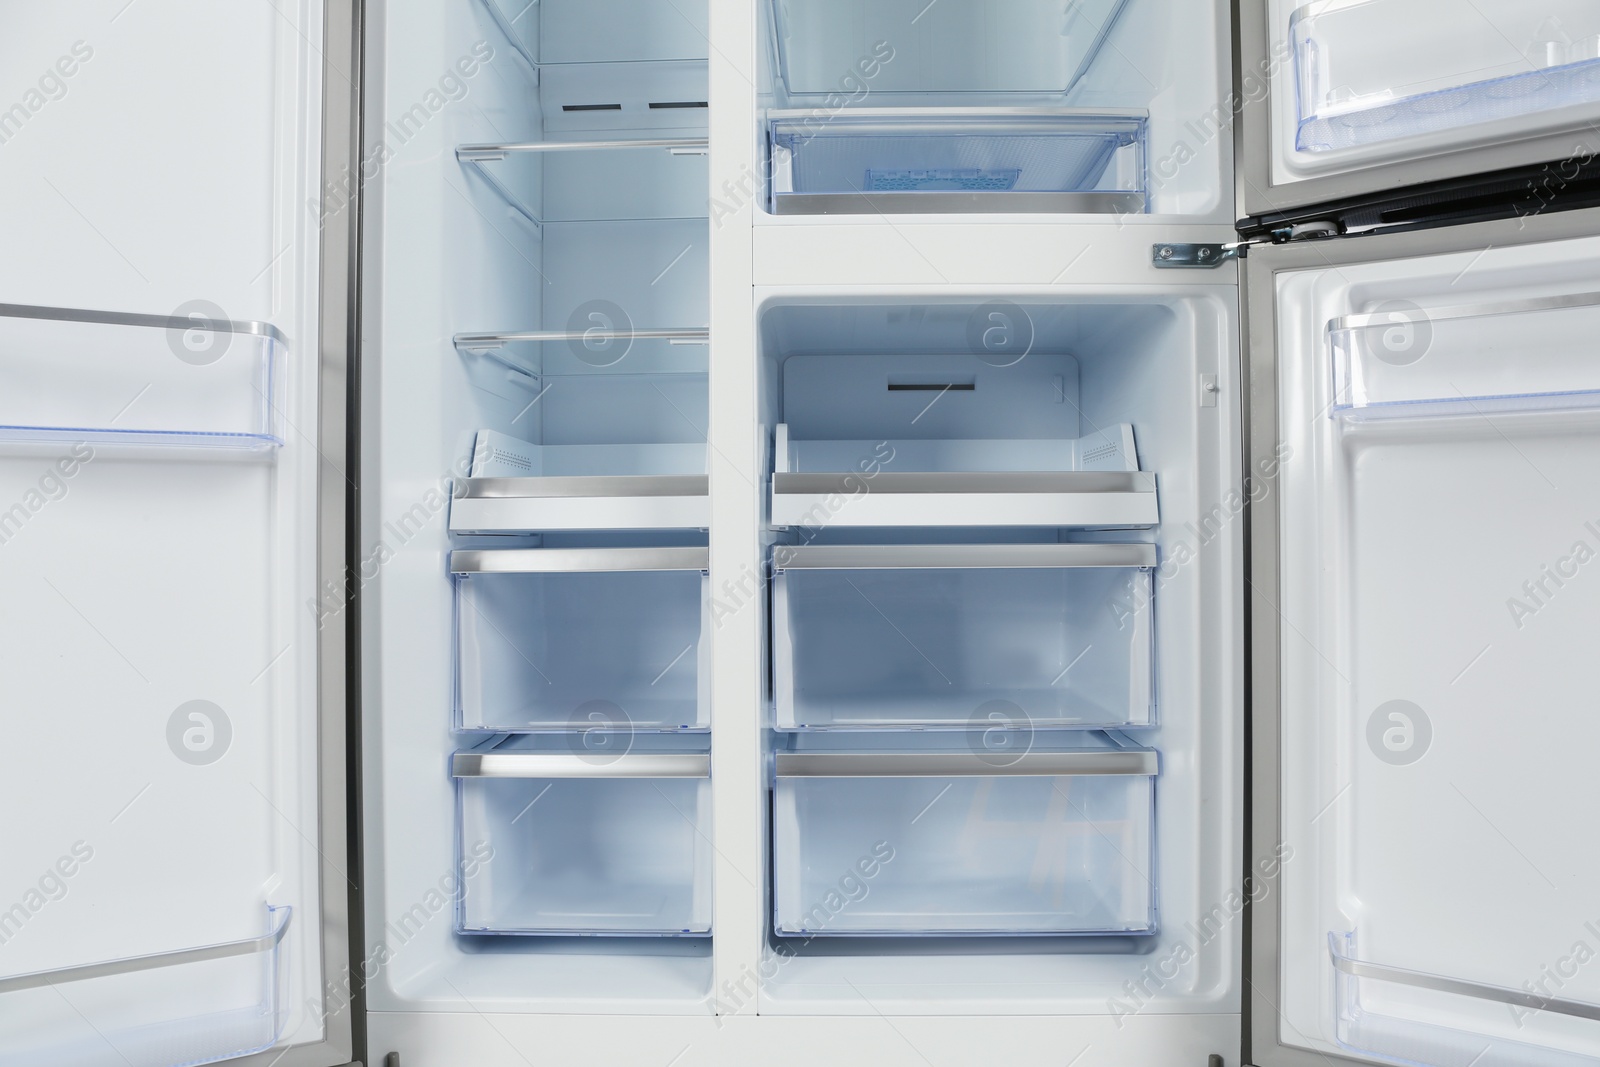 Photo of Shelves of empty modern refrigerator, closeup view